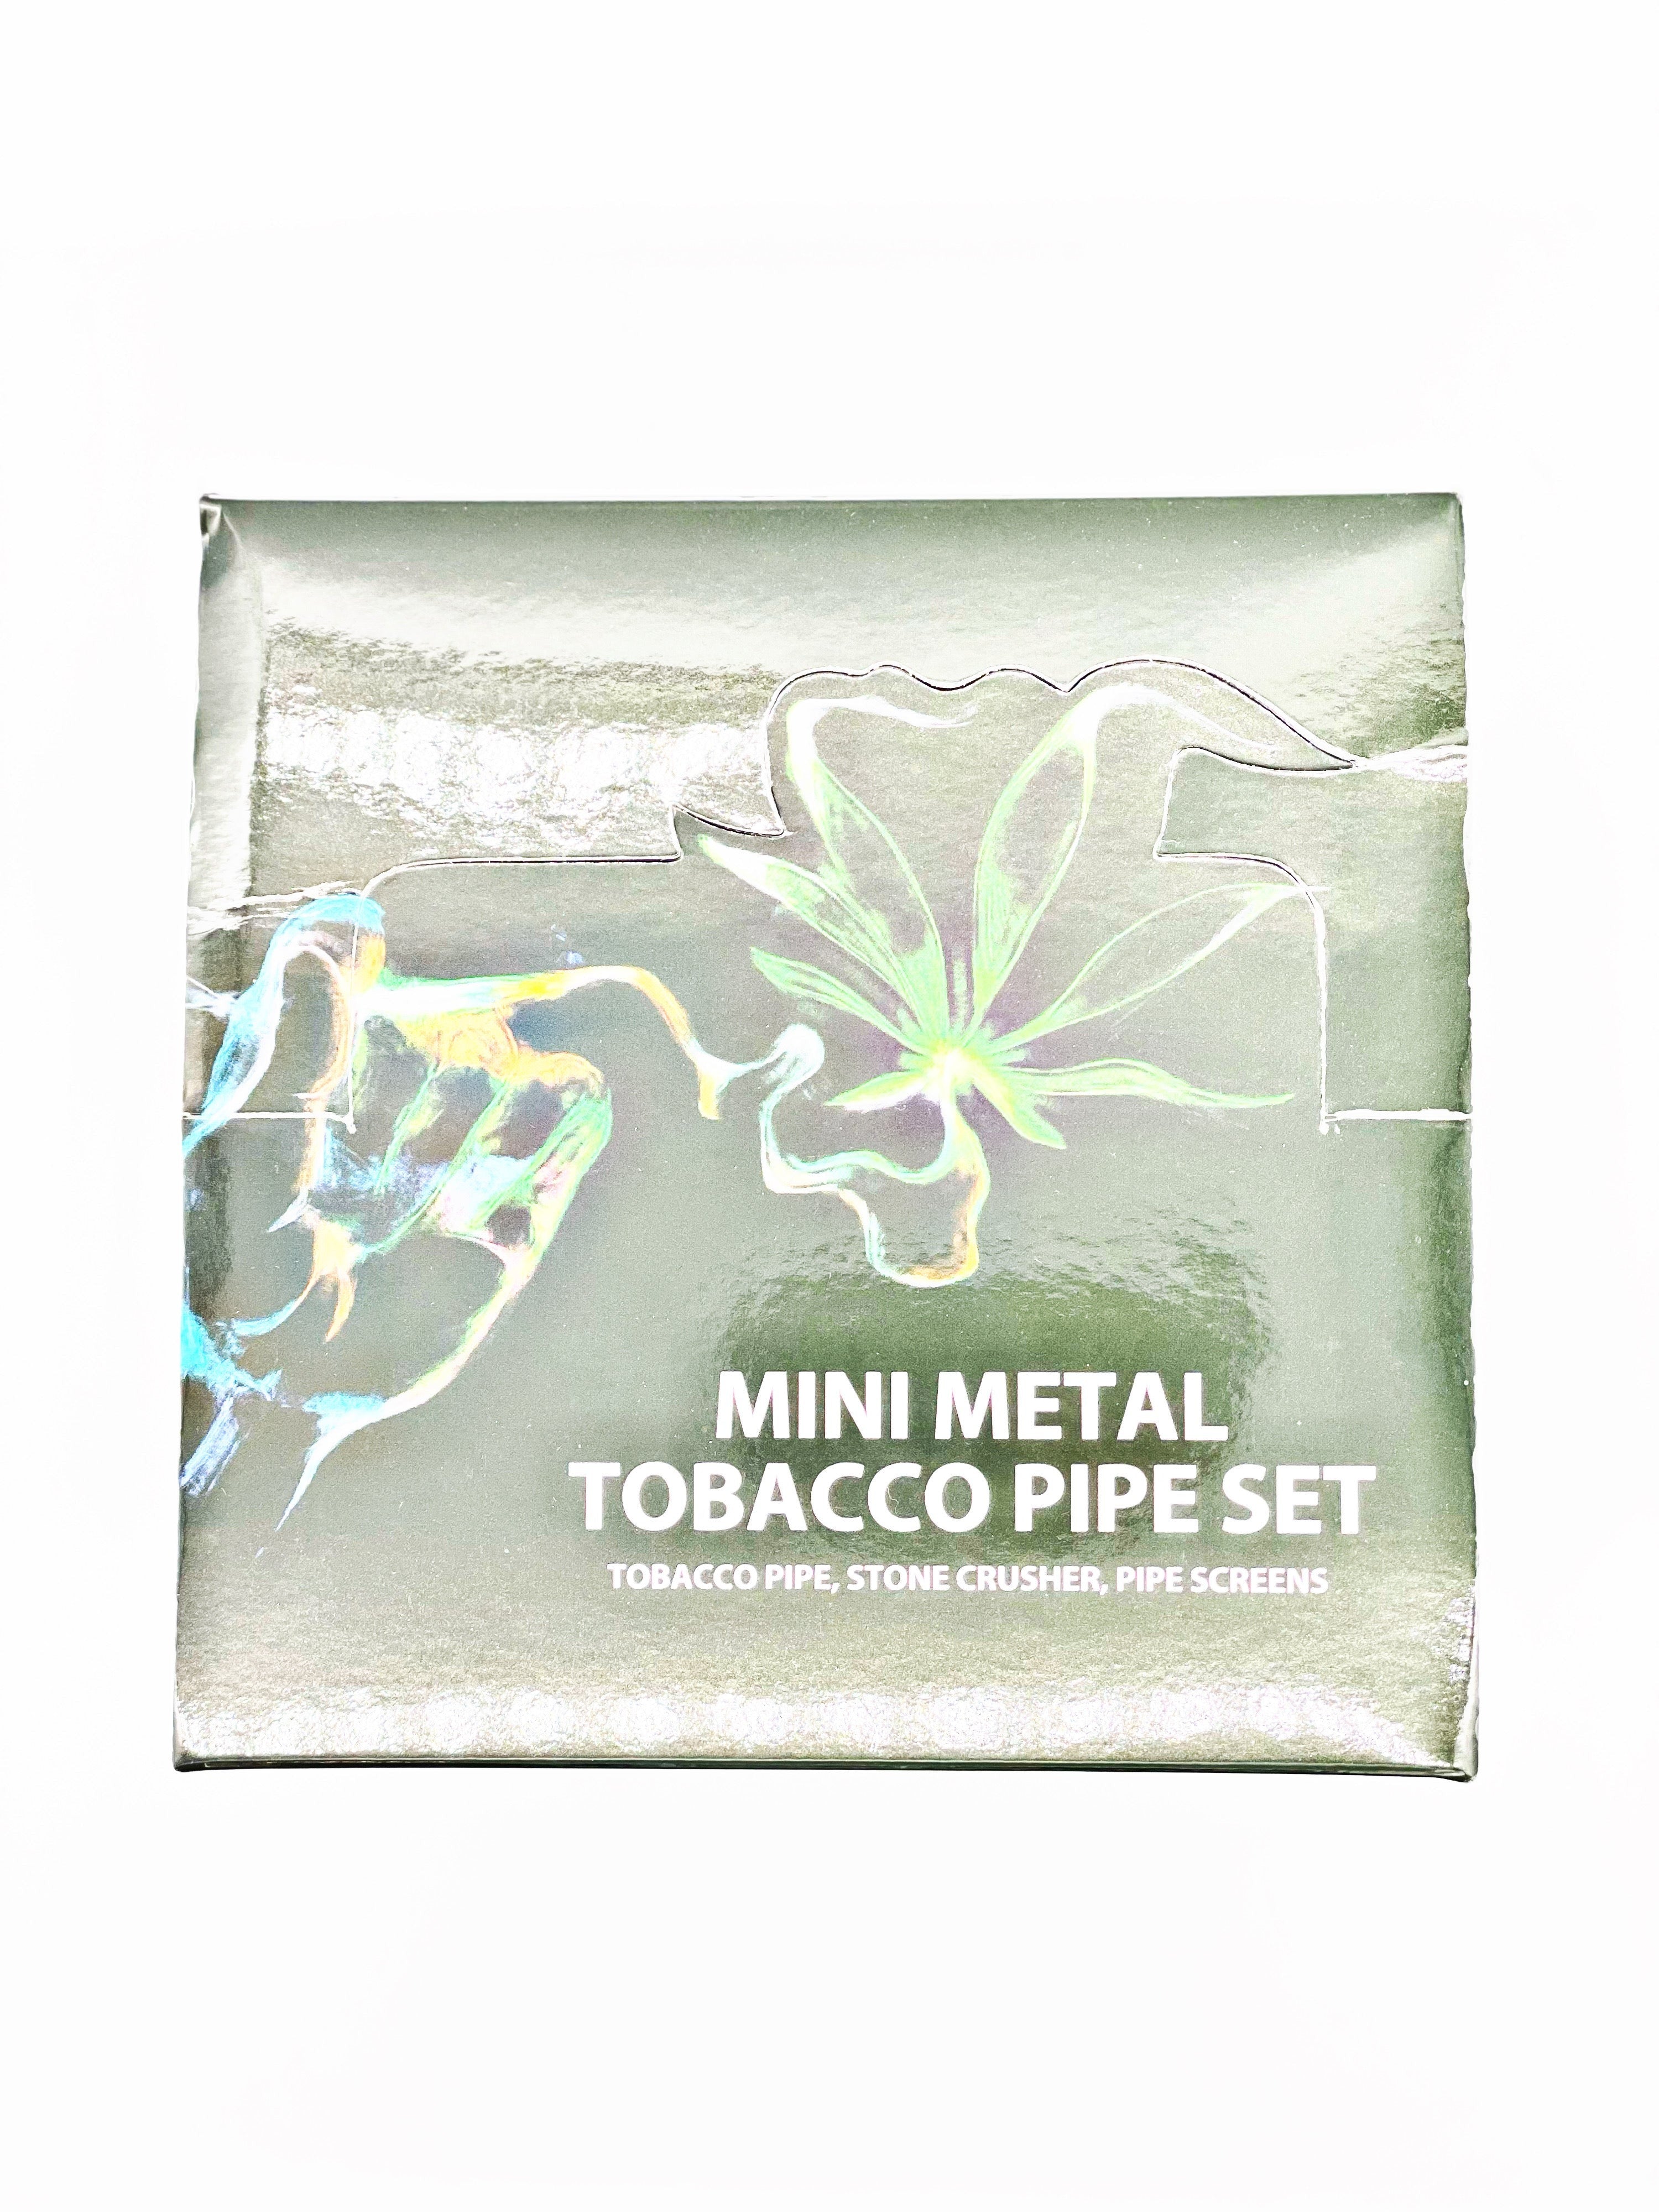 Bob Marley Mini Metal Tobacco Pipeset Wholesale - 1 Box / 12pcs